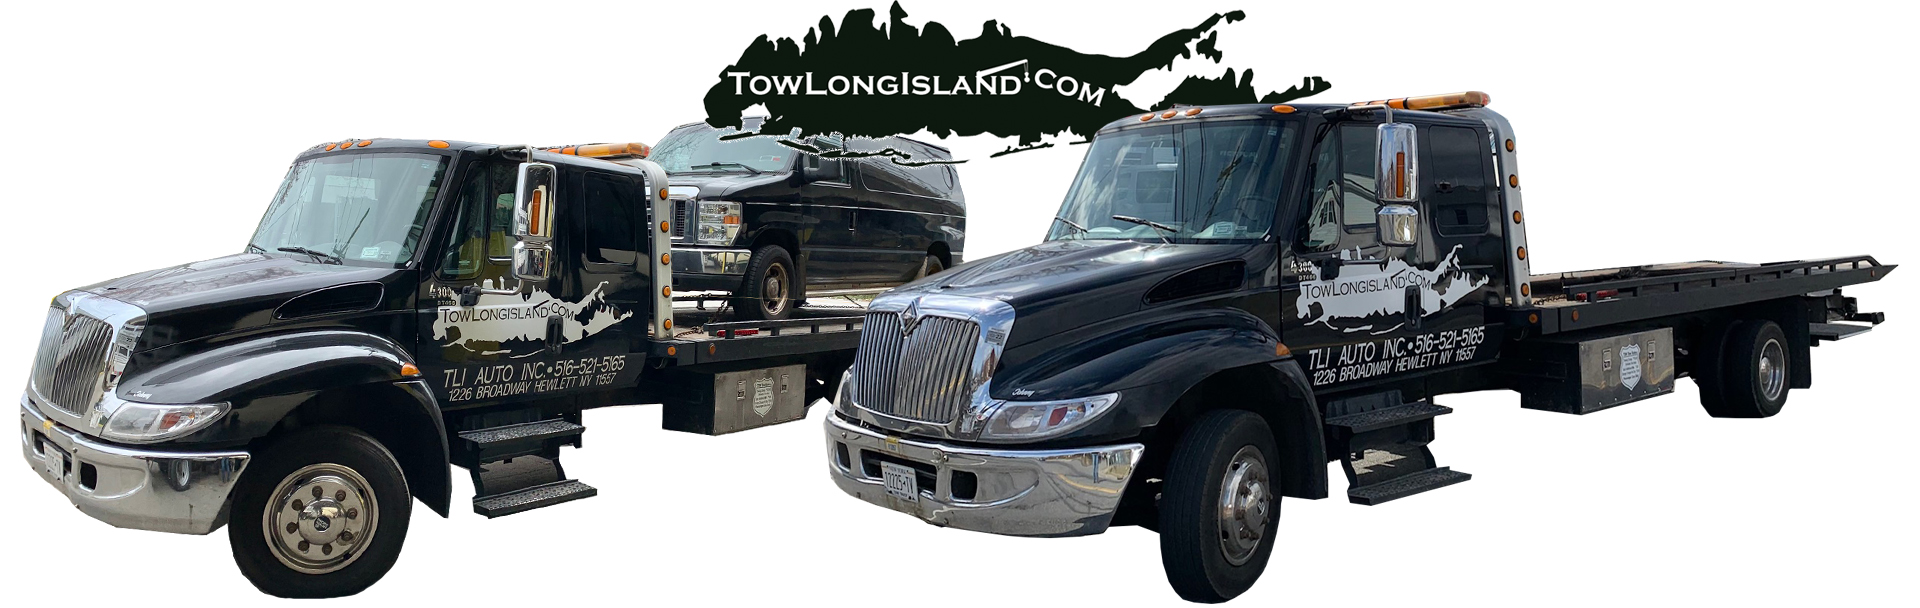 TowLongIsland.com | Tow Truck Professional Services | Garden City, Long Island, New York